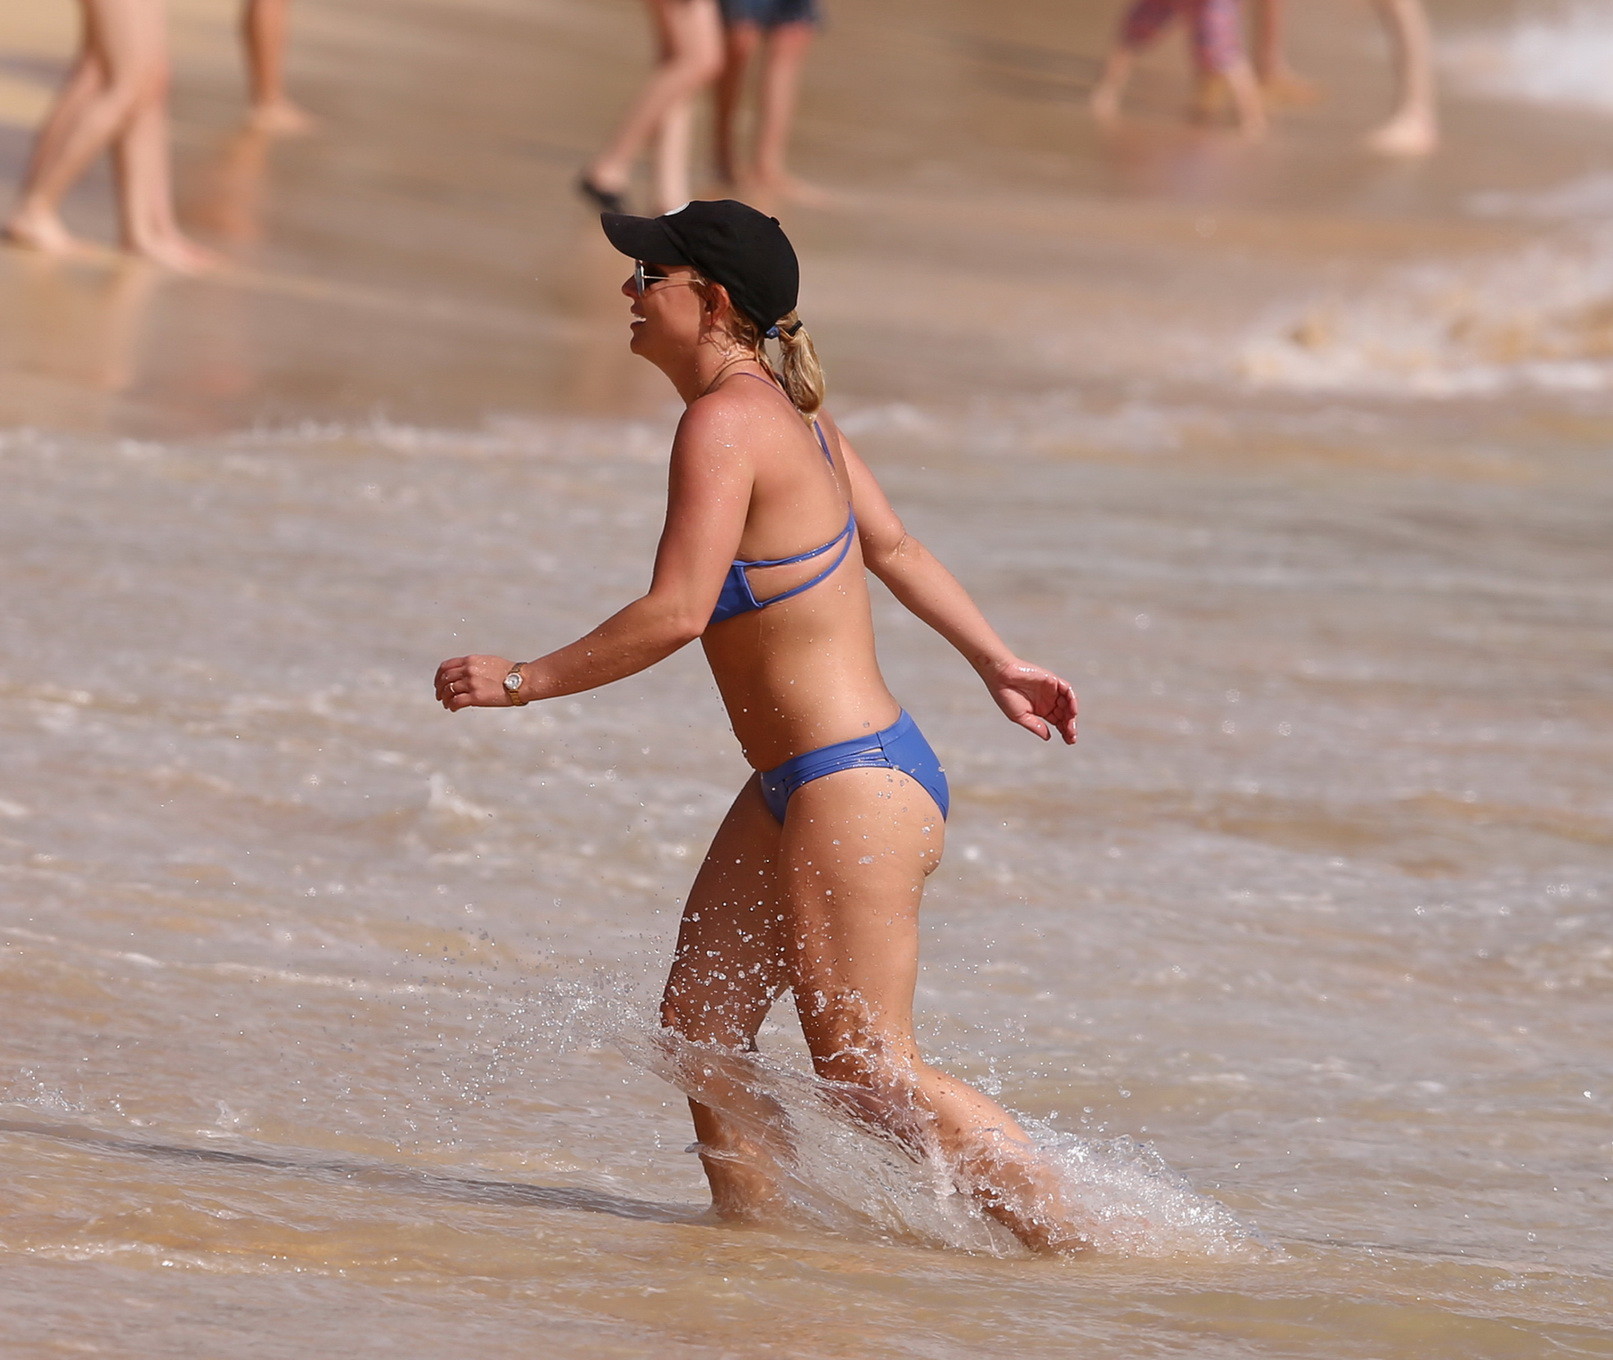 Britney spears bottino indossando succinto bikini blu in spiaggia alle Hawaii
 #75168985